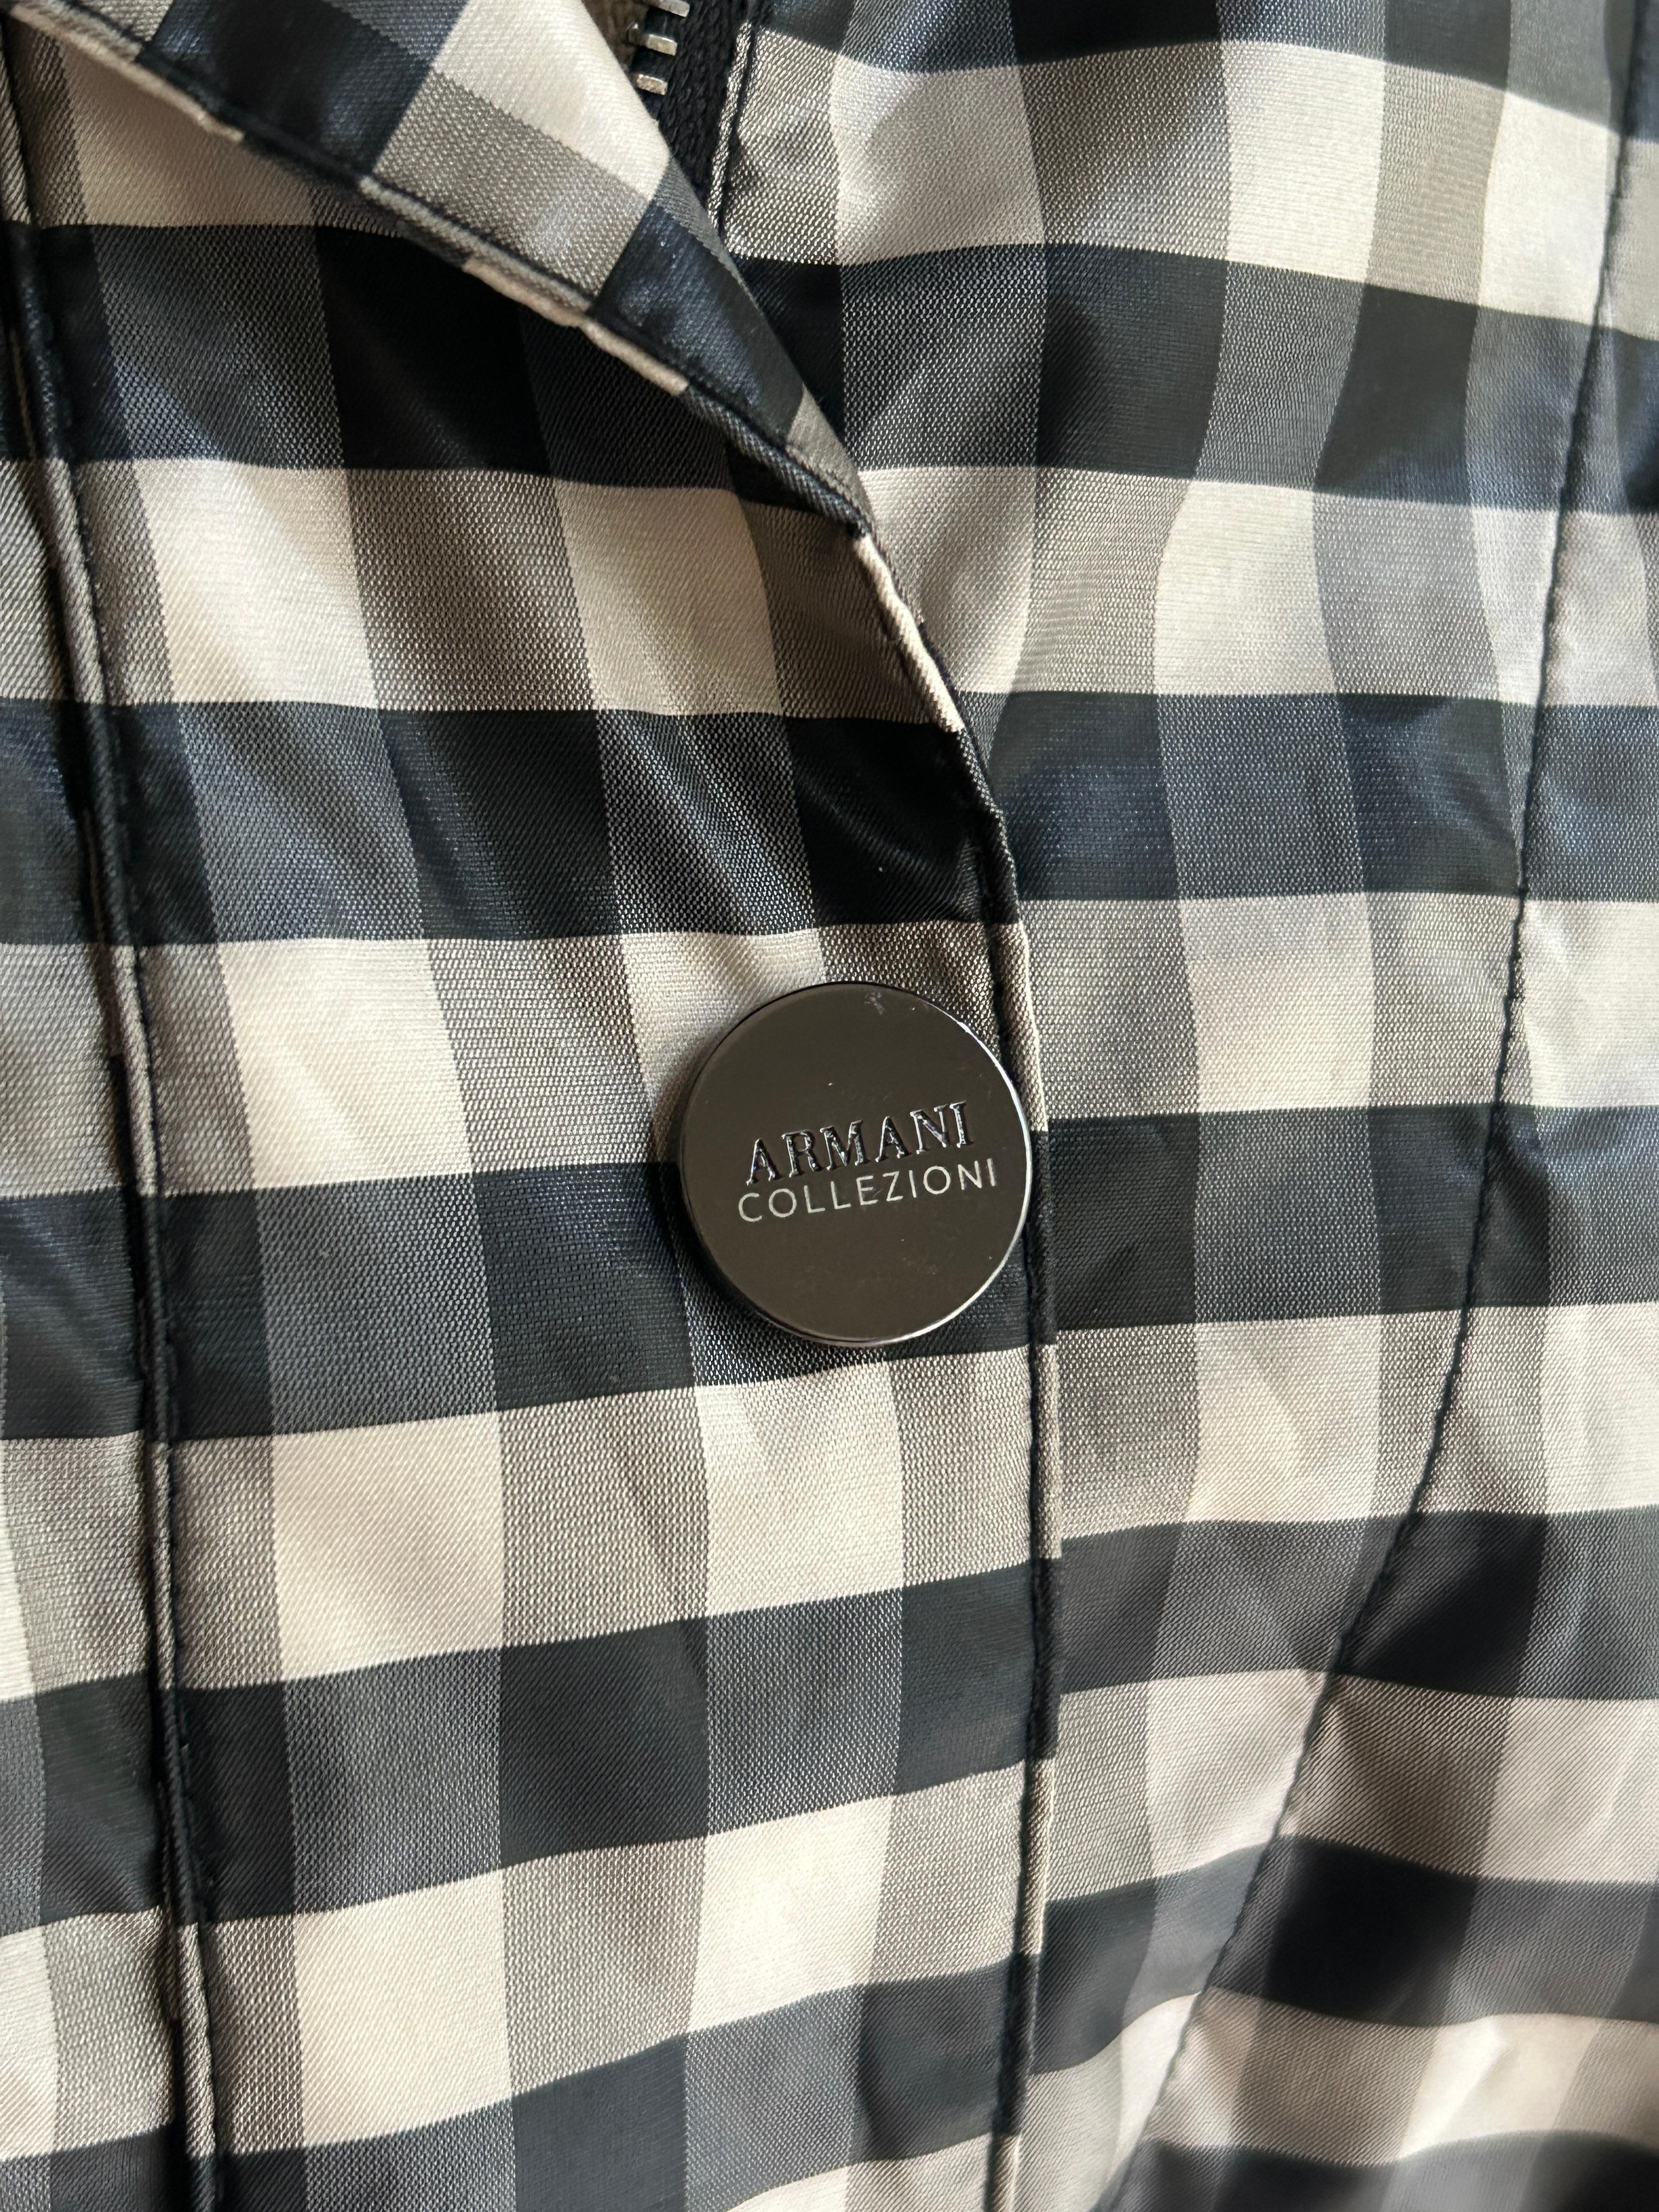 Armani Collezioni Grey and Black Check Short Sleeve Blazer Jacket For Sale 2